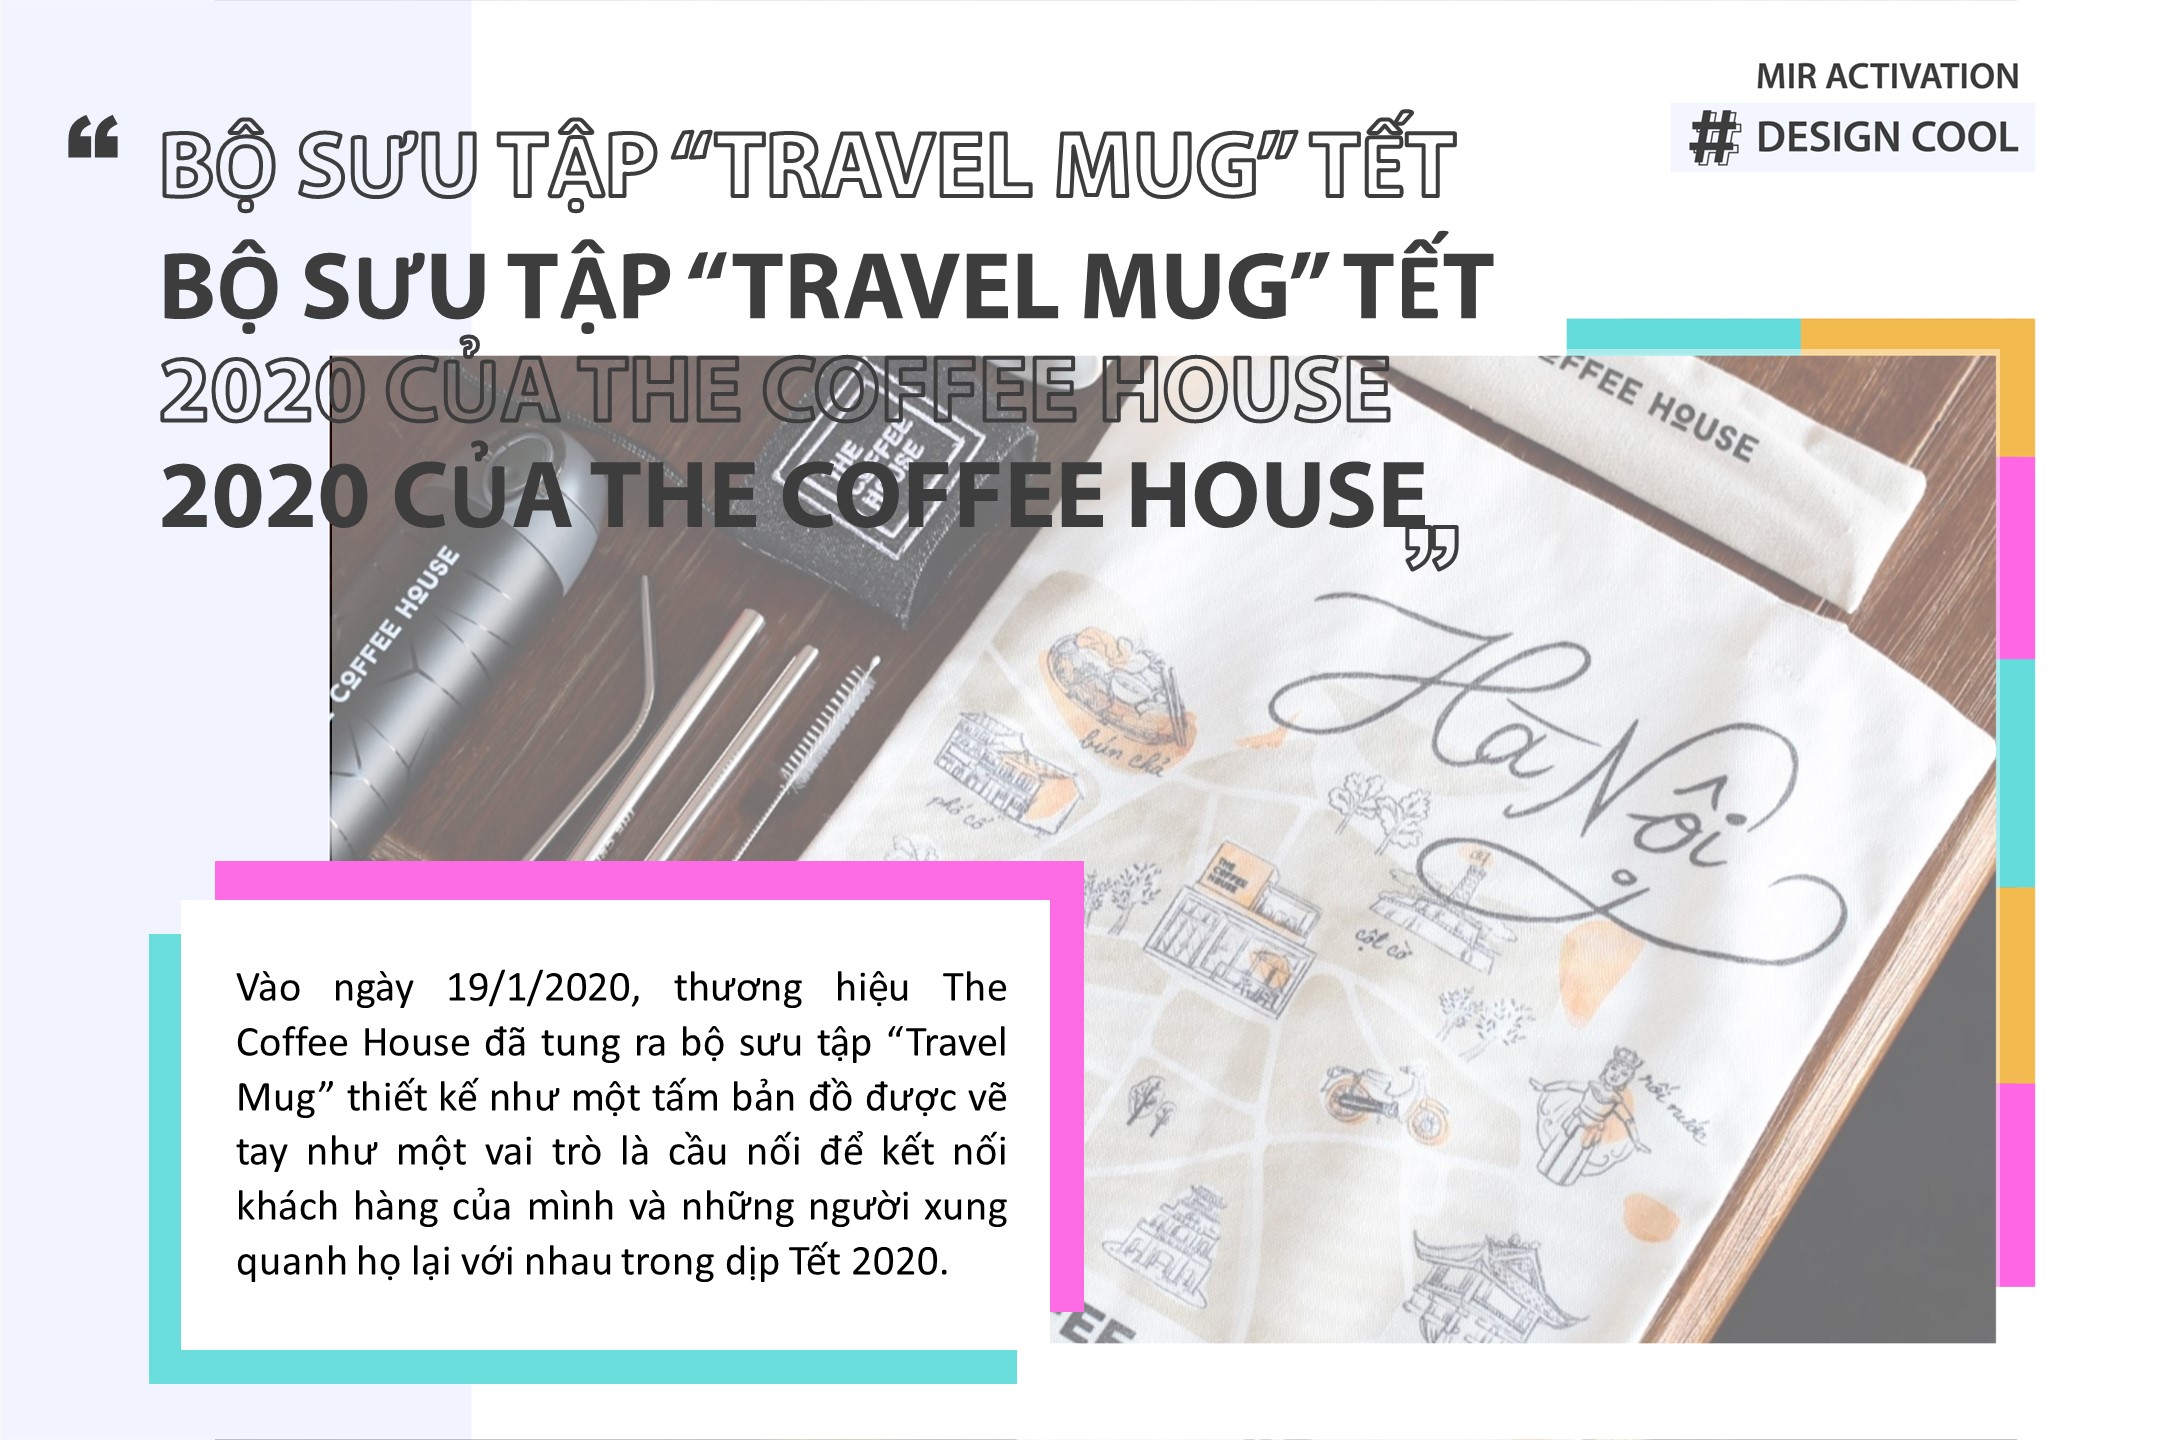 [MAYBE YOU MISSED THIS COOL DESIGN]_BỘ SƯU TẬP ‘TRAVEL MUG” TRONG DỊP TẾT NĂM 2020 CỦA THE COFFEE HOUSE